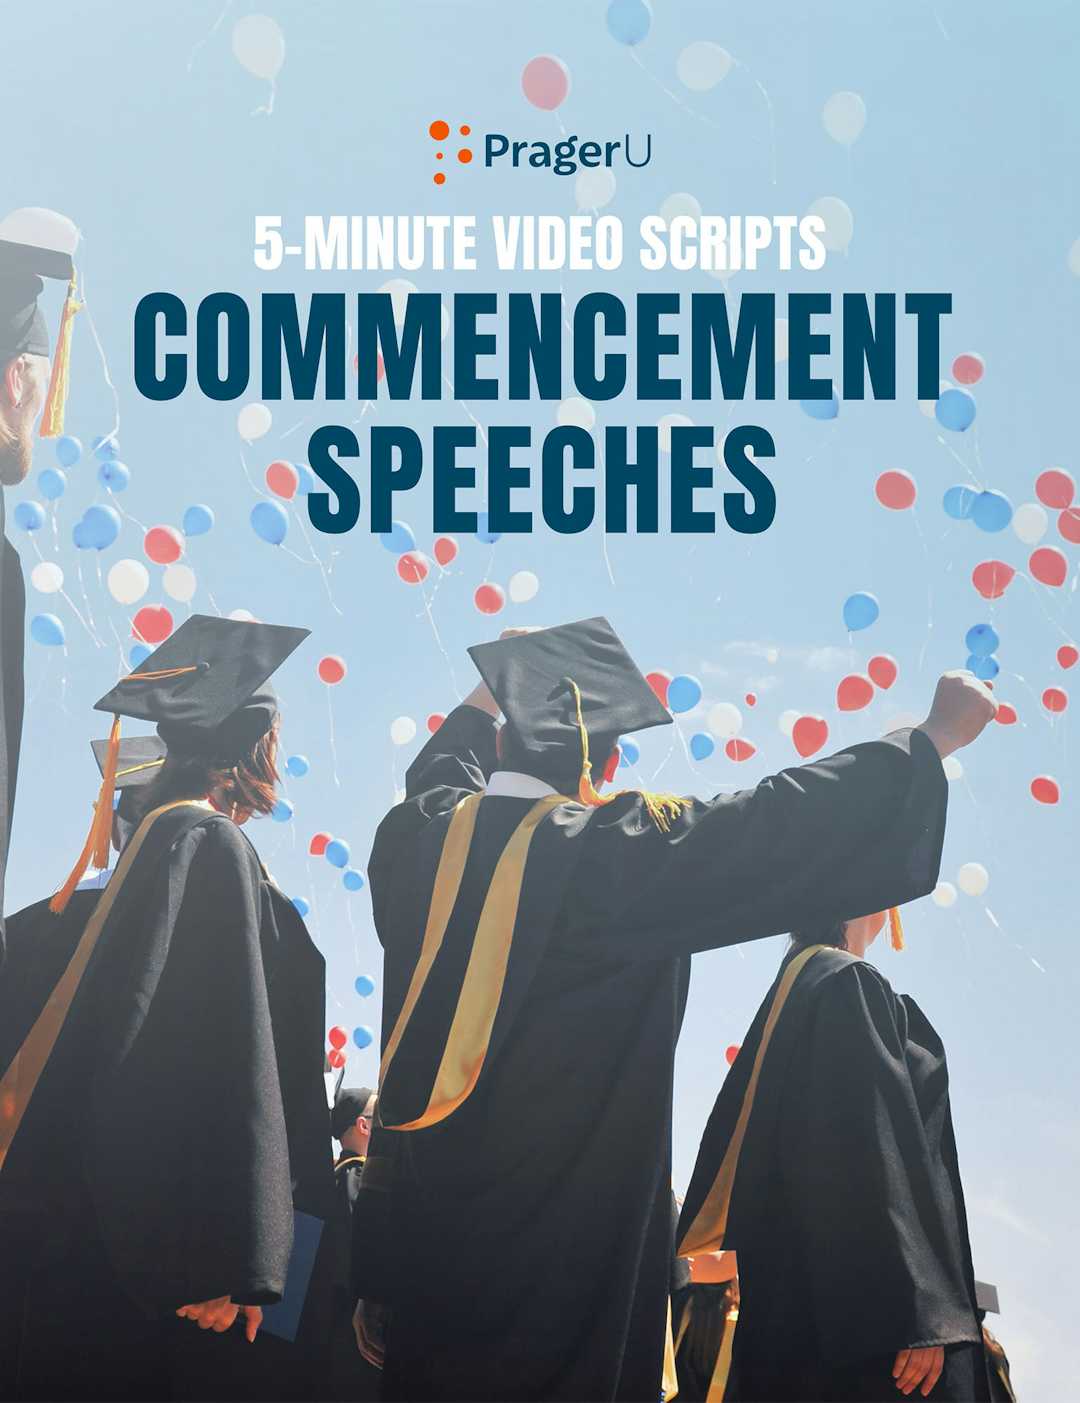 PragerU’s Commencement Speeches e-book